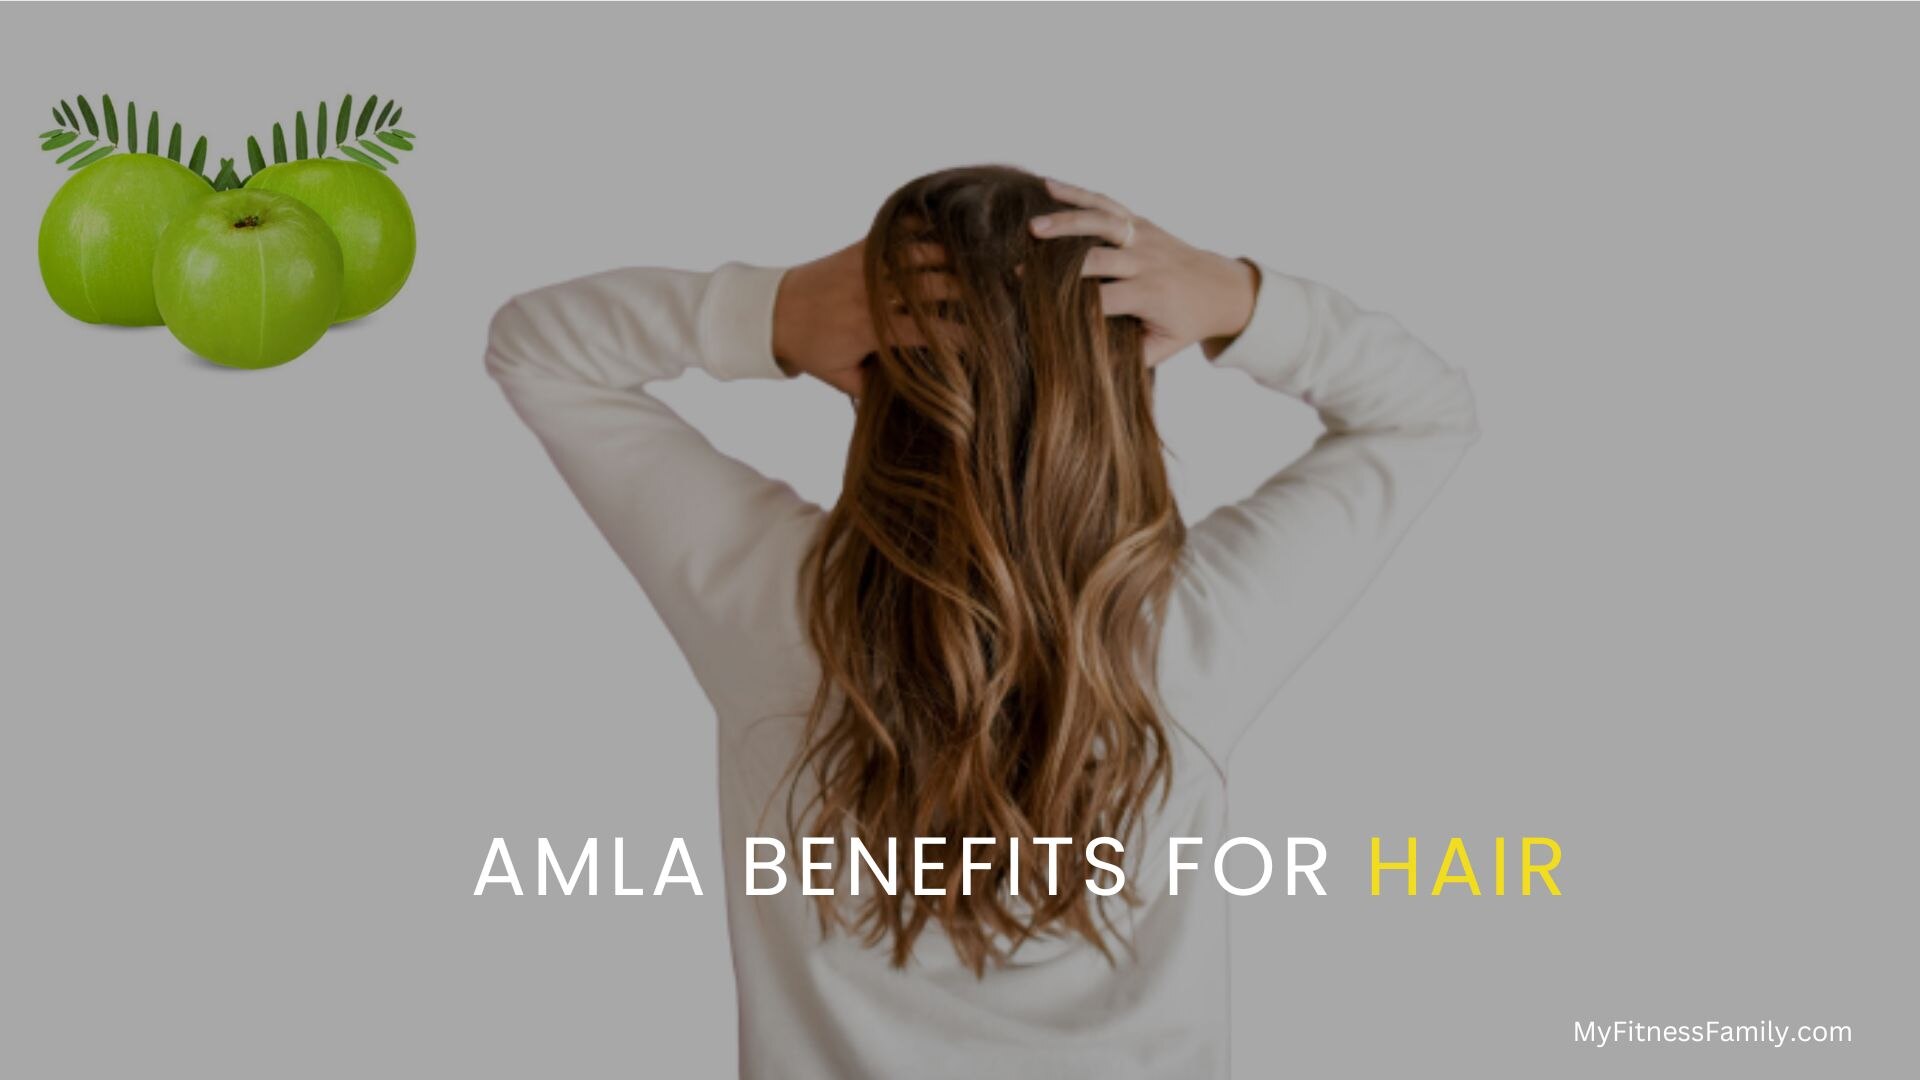 Amla benefits for hair